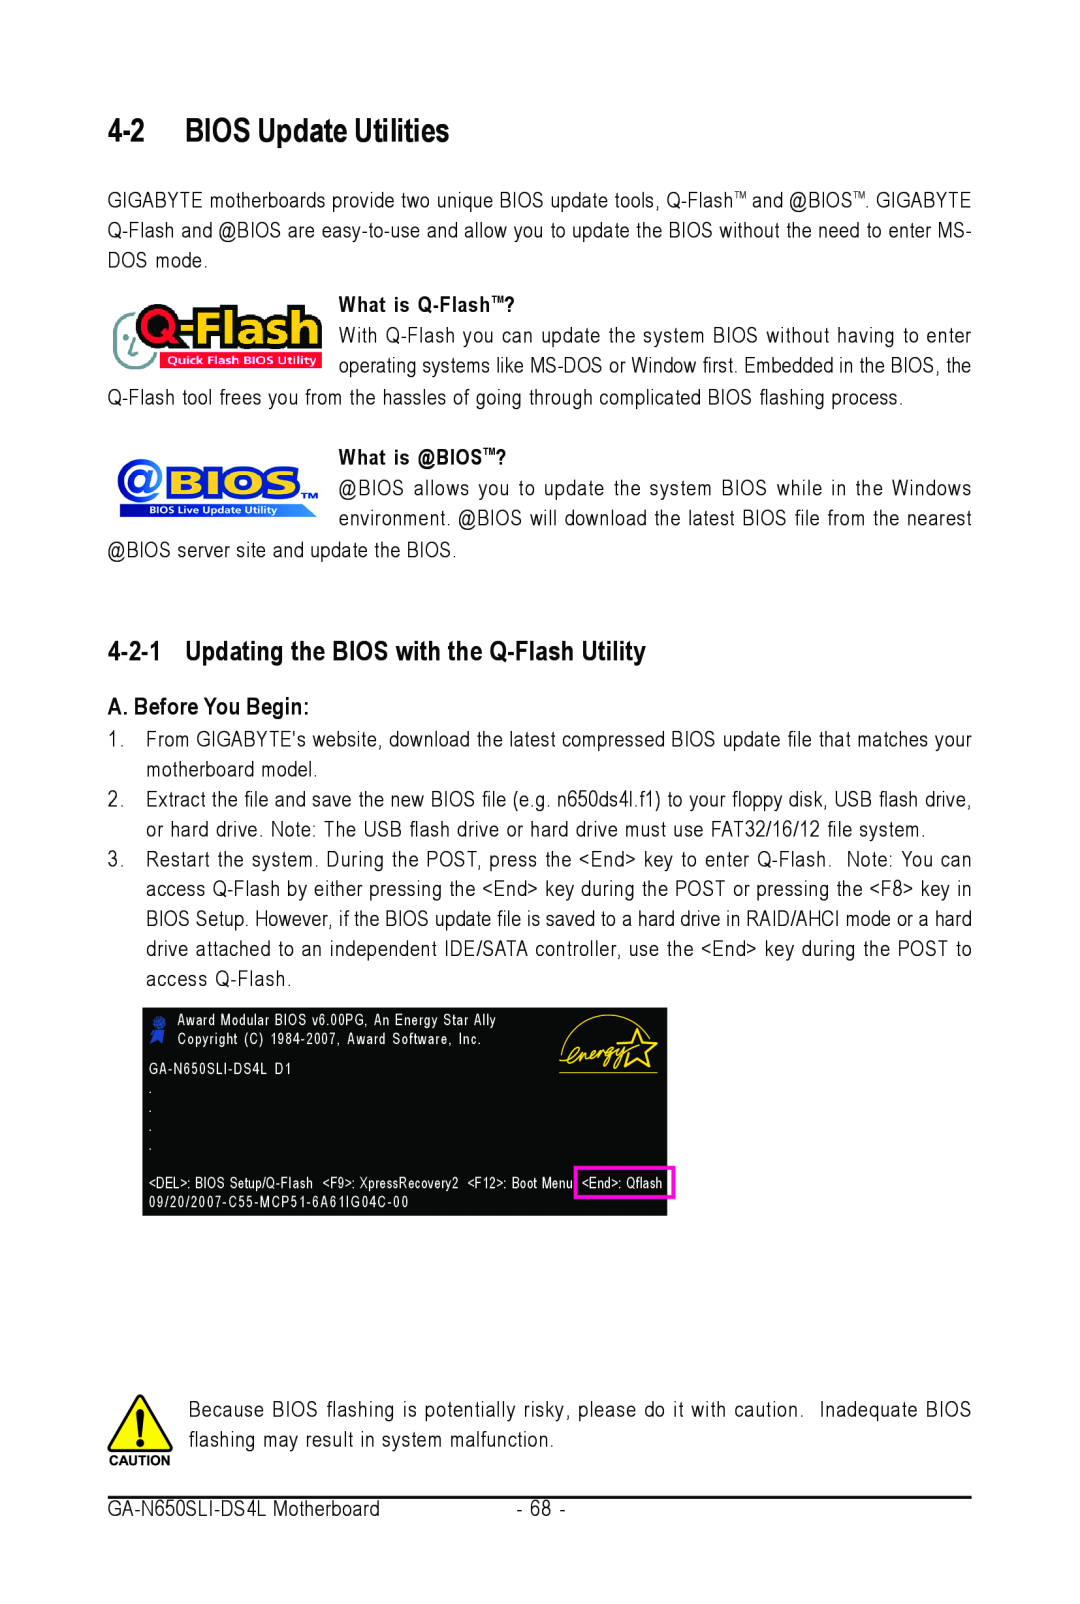 Intel GA-N650SLI-DS4L user manual BIOS Update Utilities, Updating the BIOS with the Q-Flash Utility, A. Before You Begin 